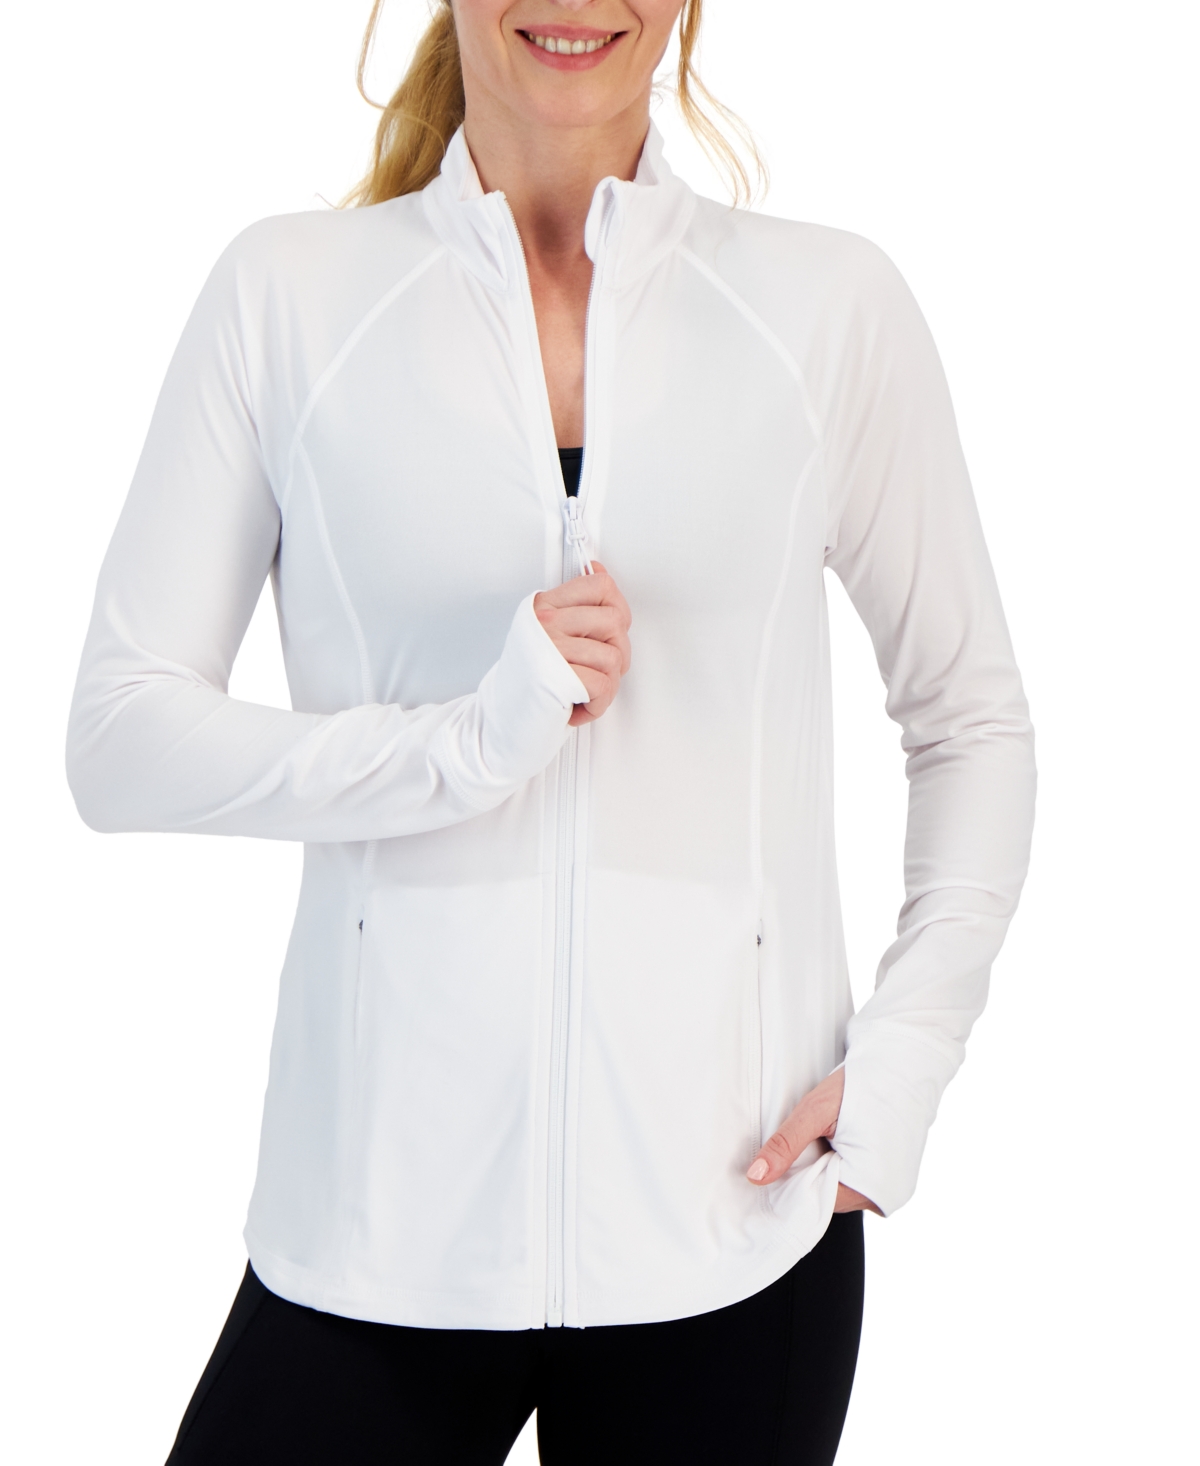 Women's Performance Full-Zip Jacket, Created for Macy's - Bright White